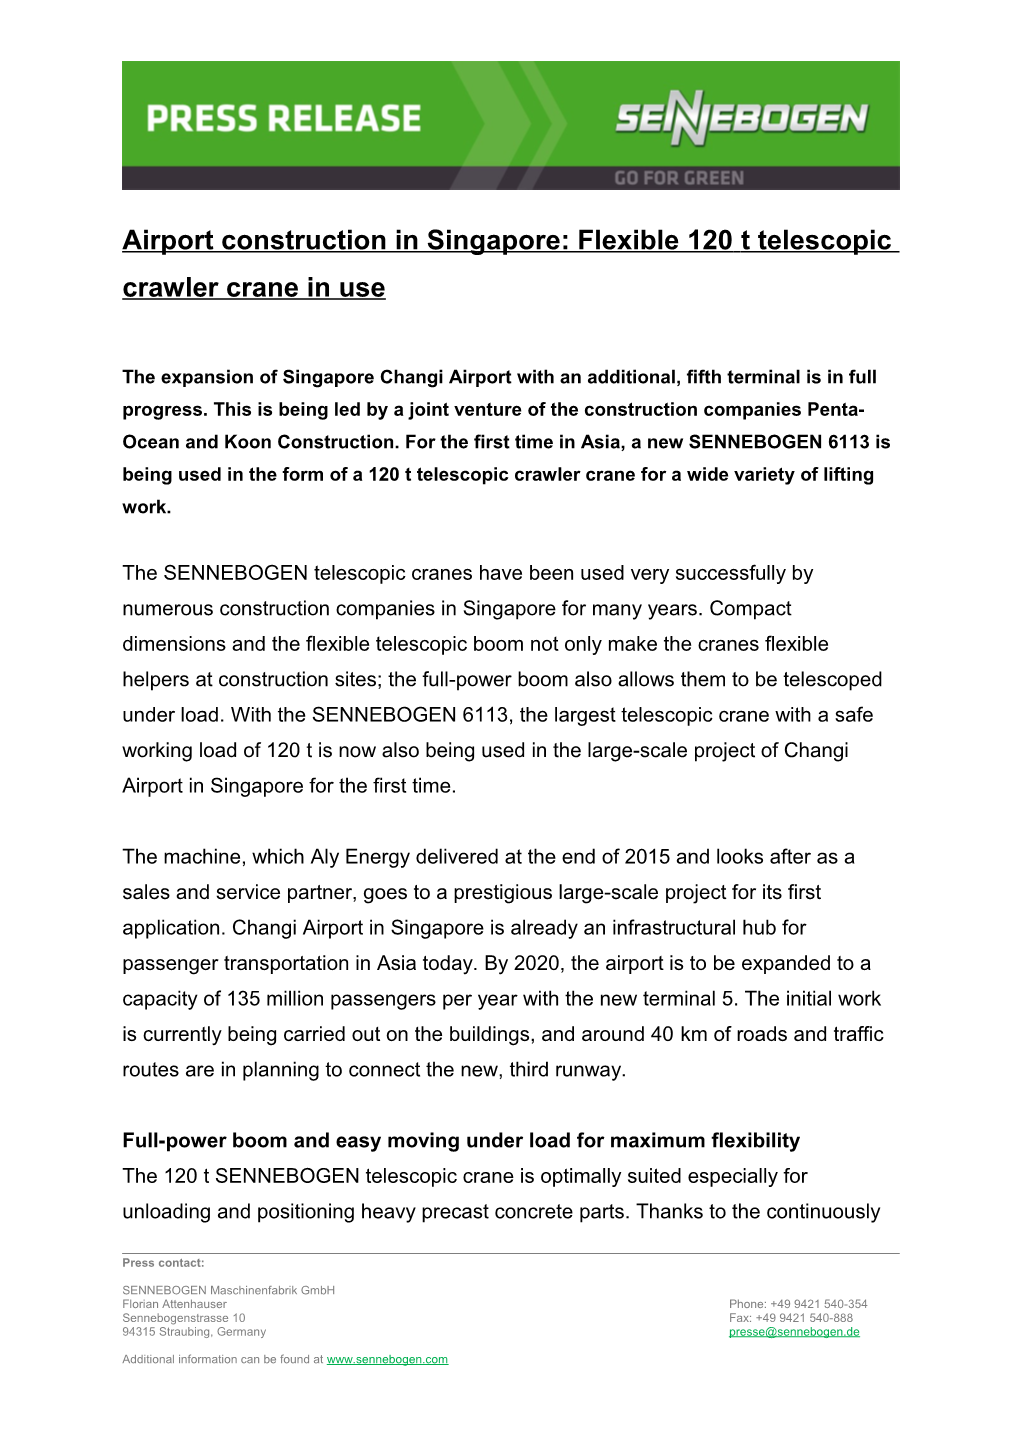 Airport Construction in Singapore: Flexible 120T Telescopic Crawler Crane in Use